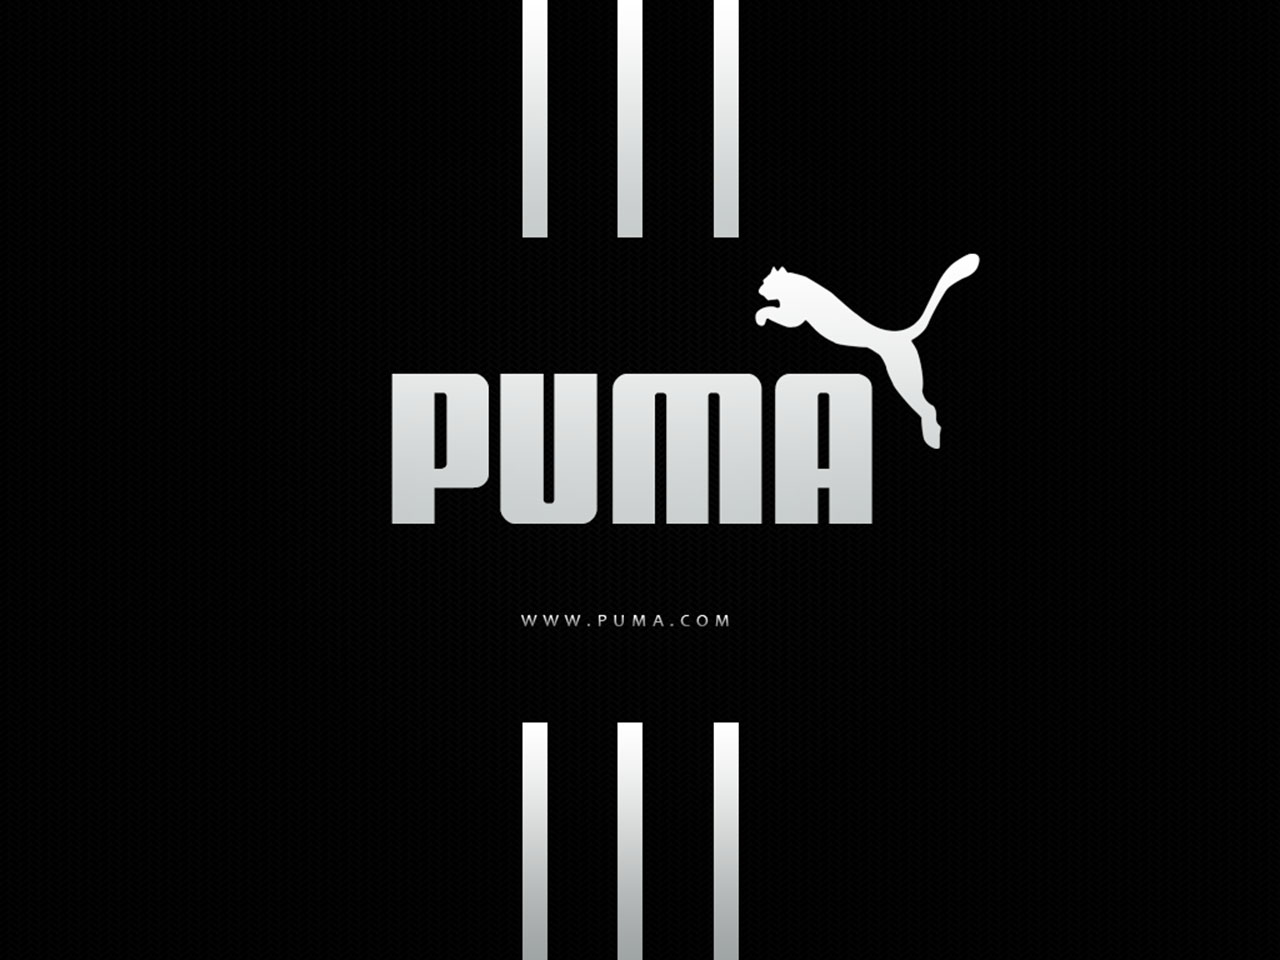 Puma raises sales outlook for 2014 as sneaker sales rebound